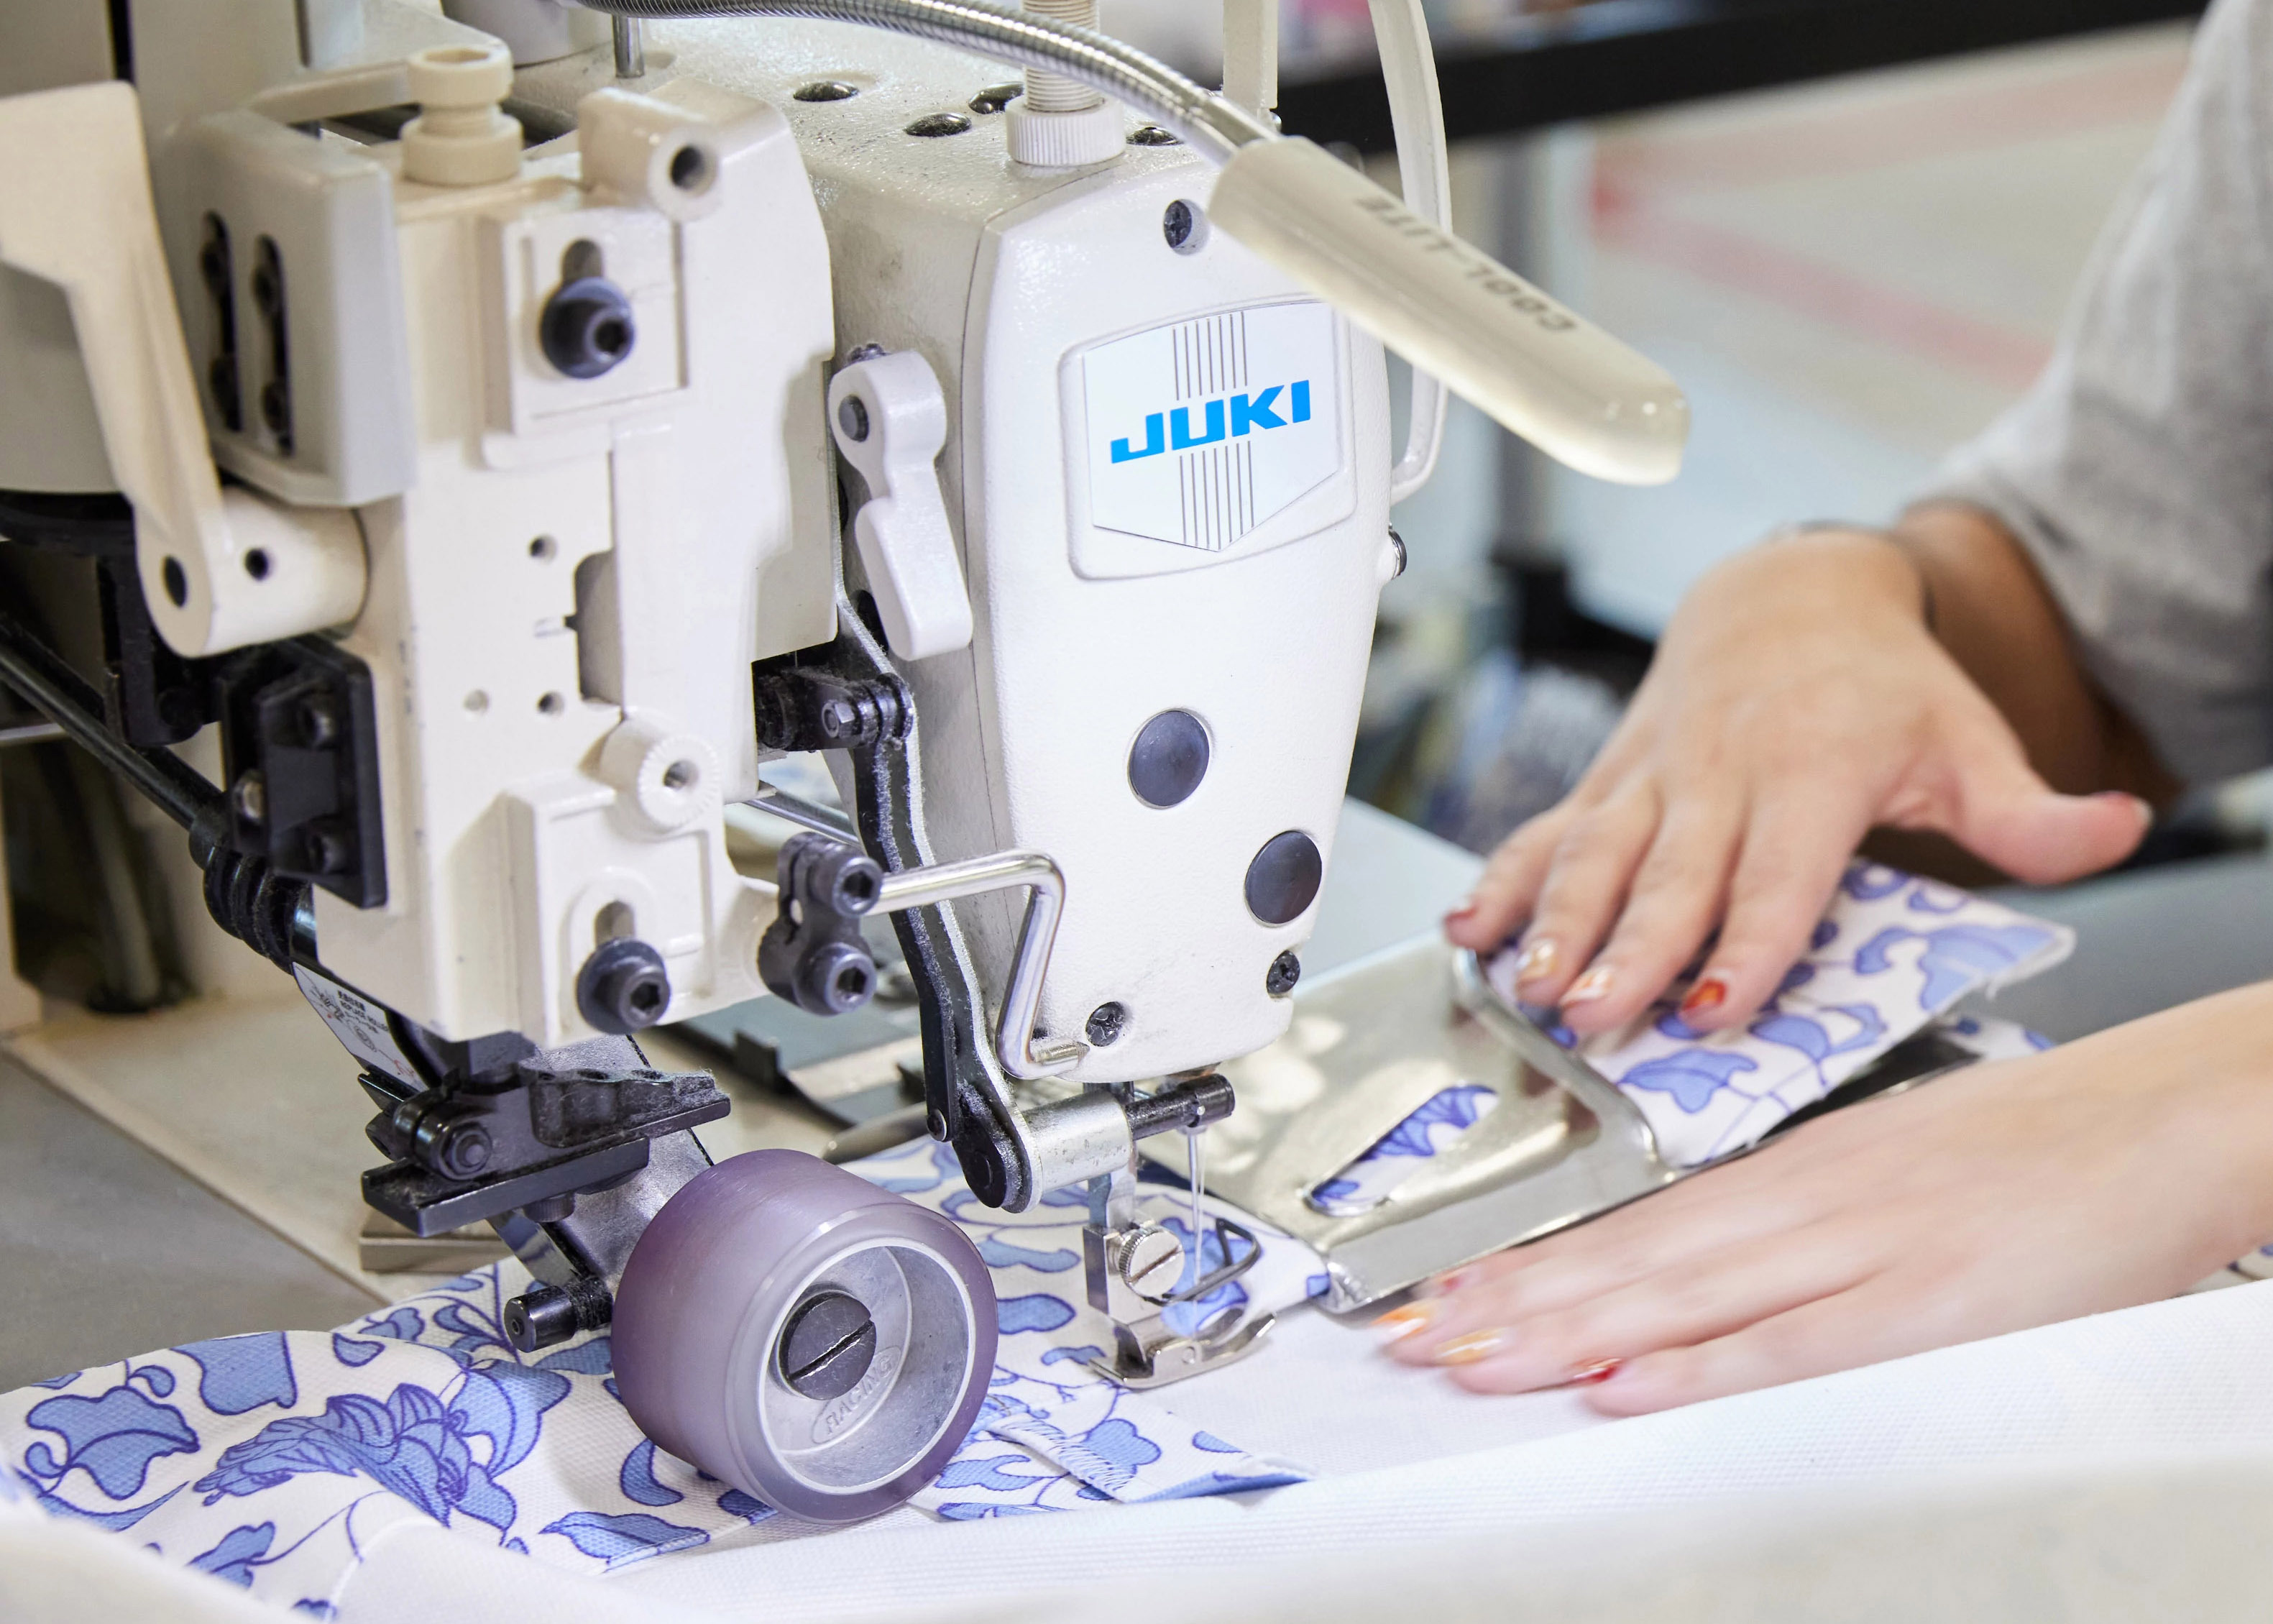 Hands feeding fabric through sewing machine